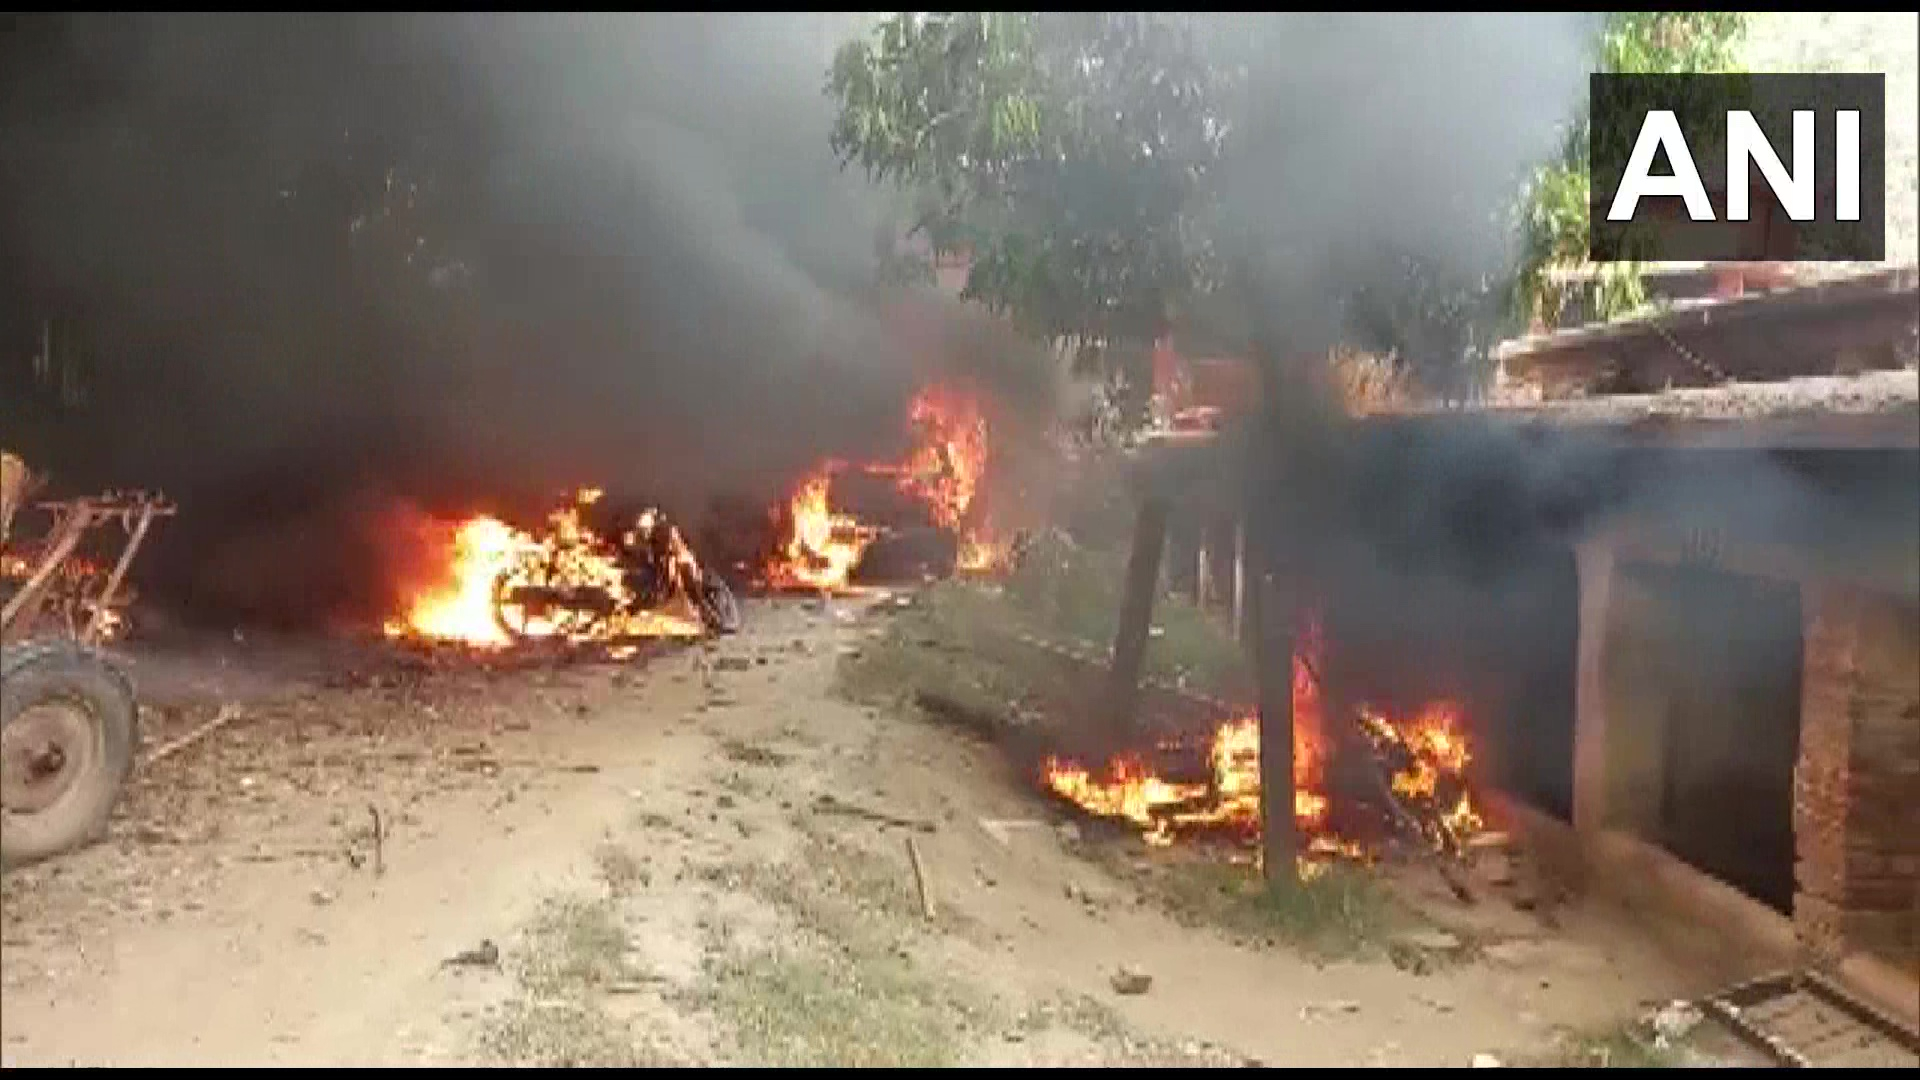 Several vehicles were set ablaze at GRP Taregana by agitators who were protesting against Agnipath